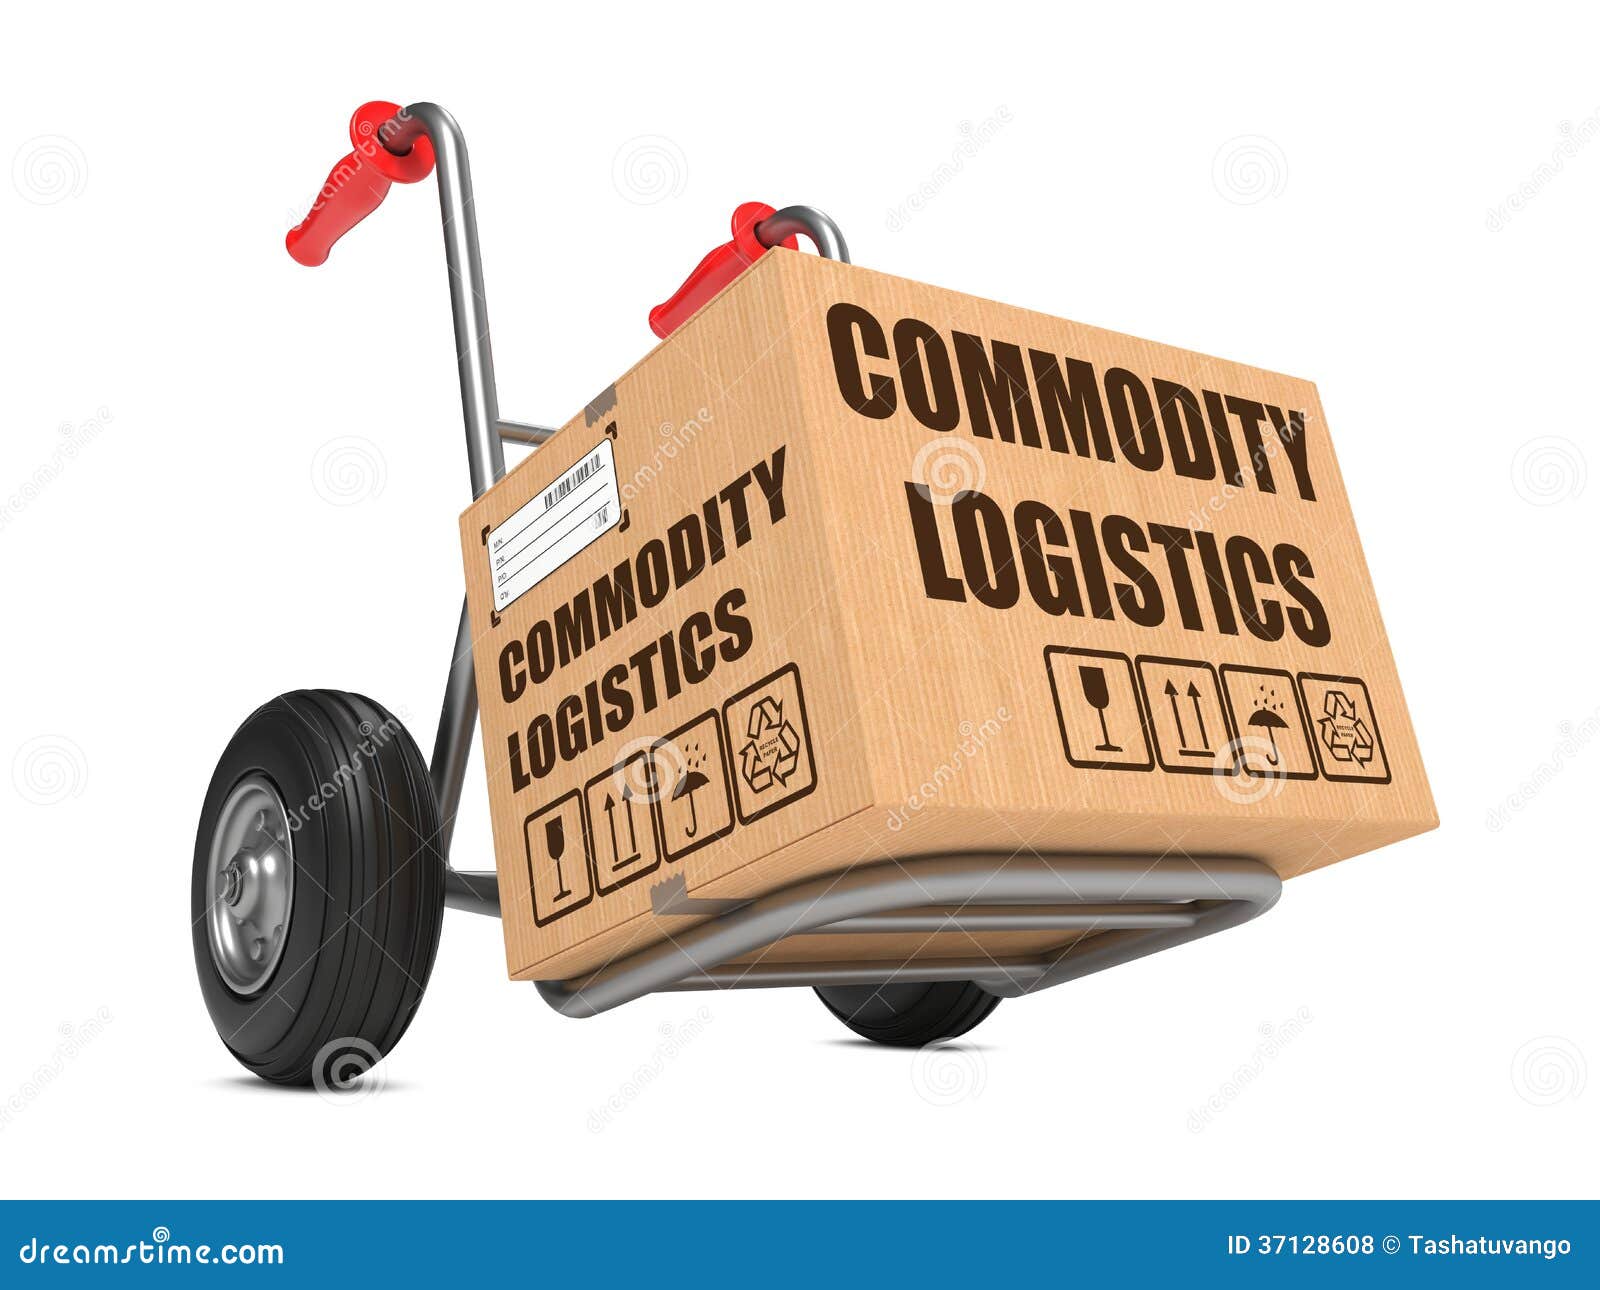 commodity logistics - cardboard box on hand truck.